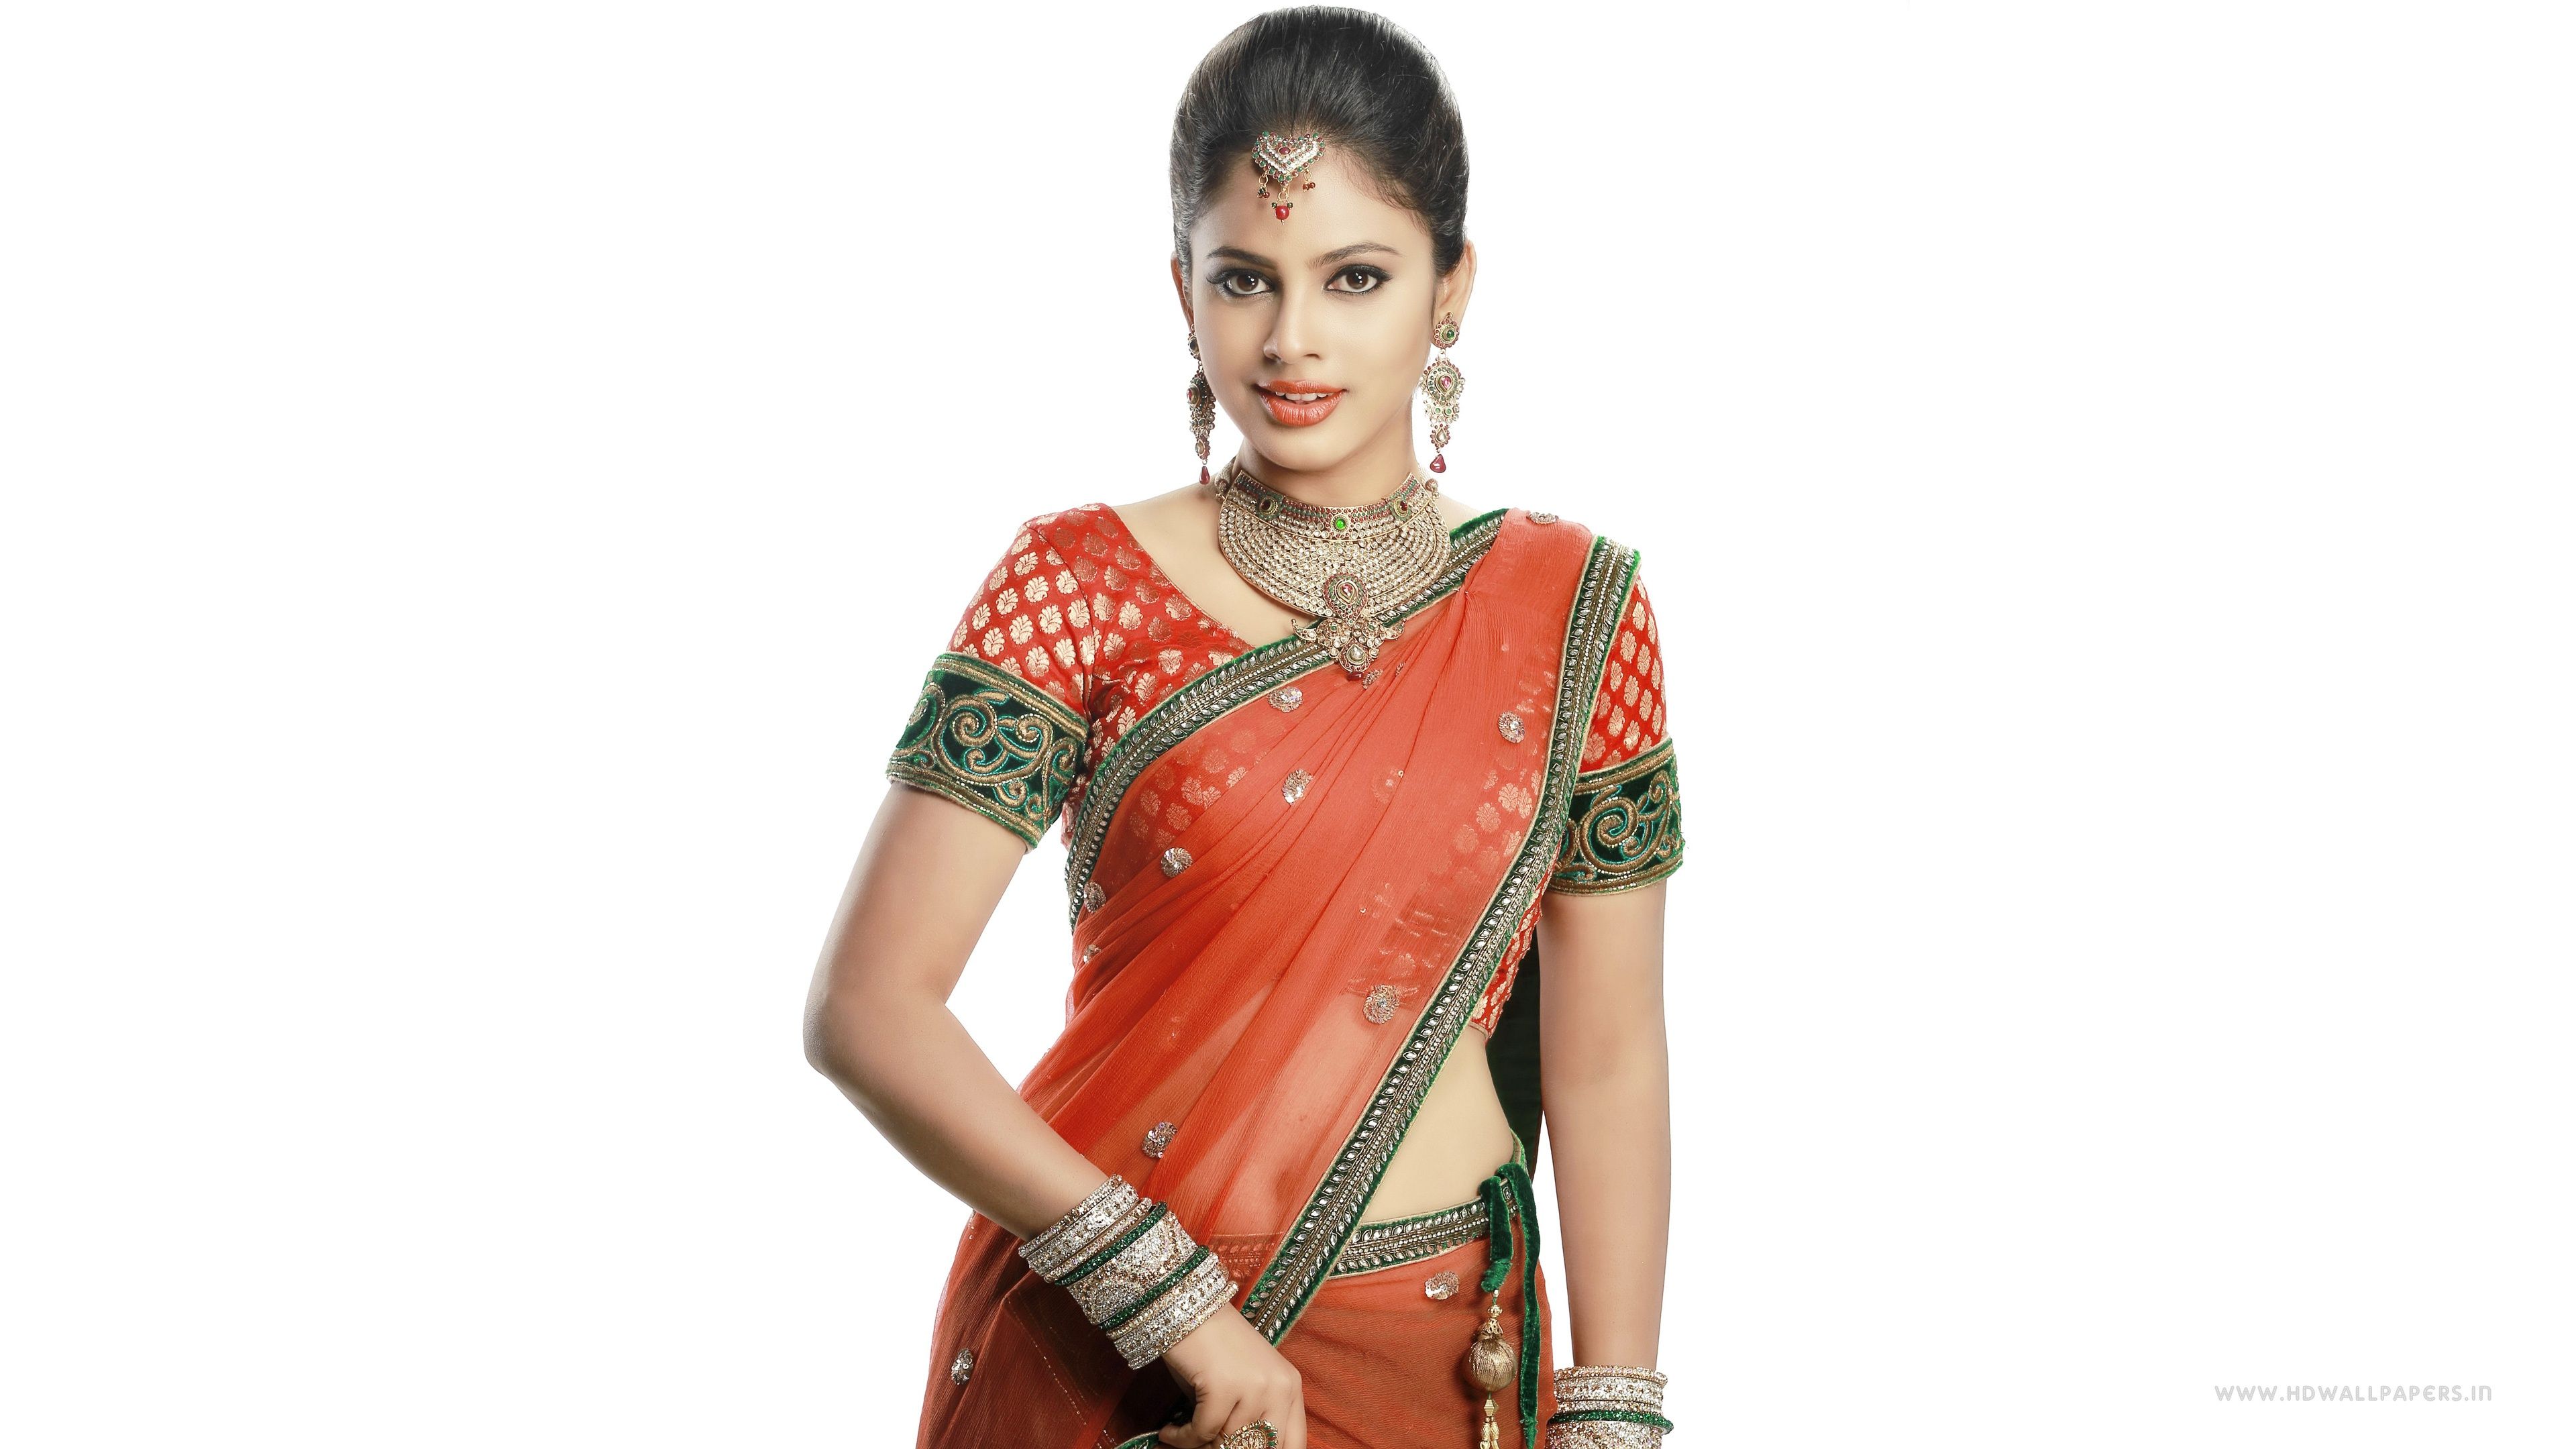 Saree Actress Nandita Swetha Wallpaper in jpg format for free